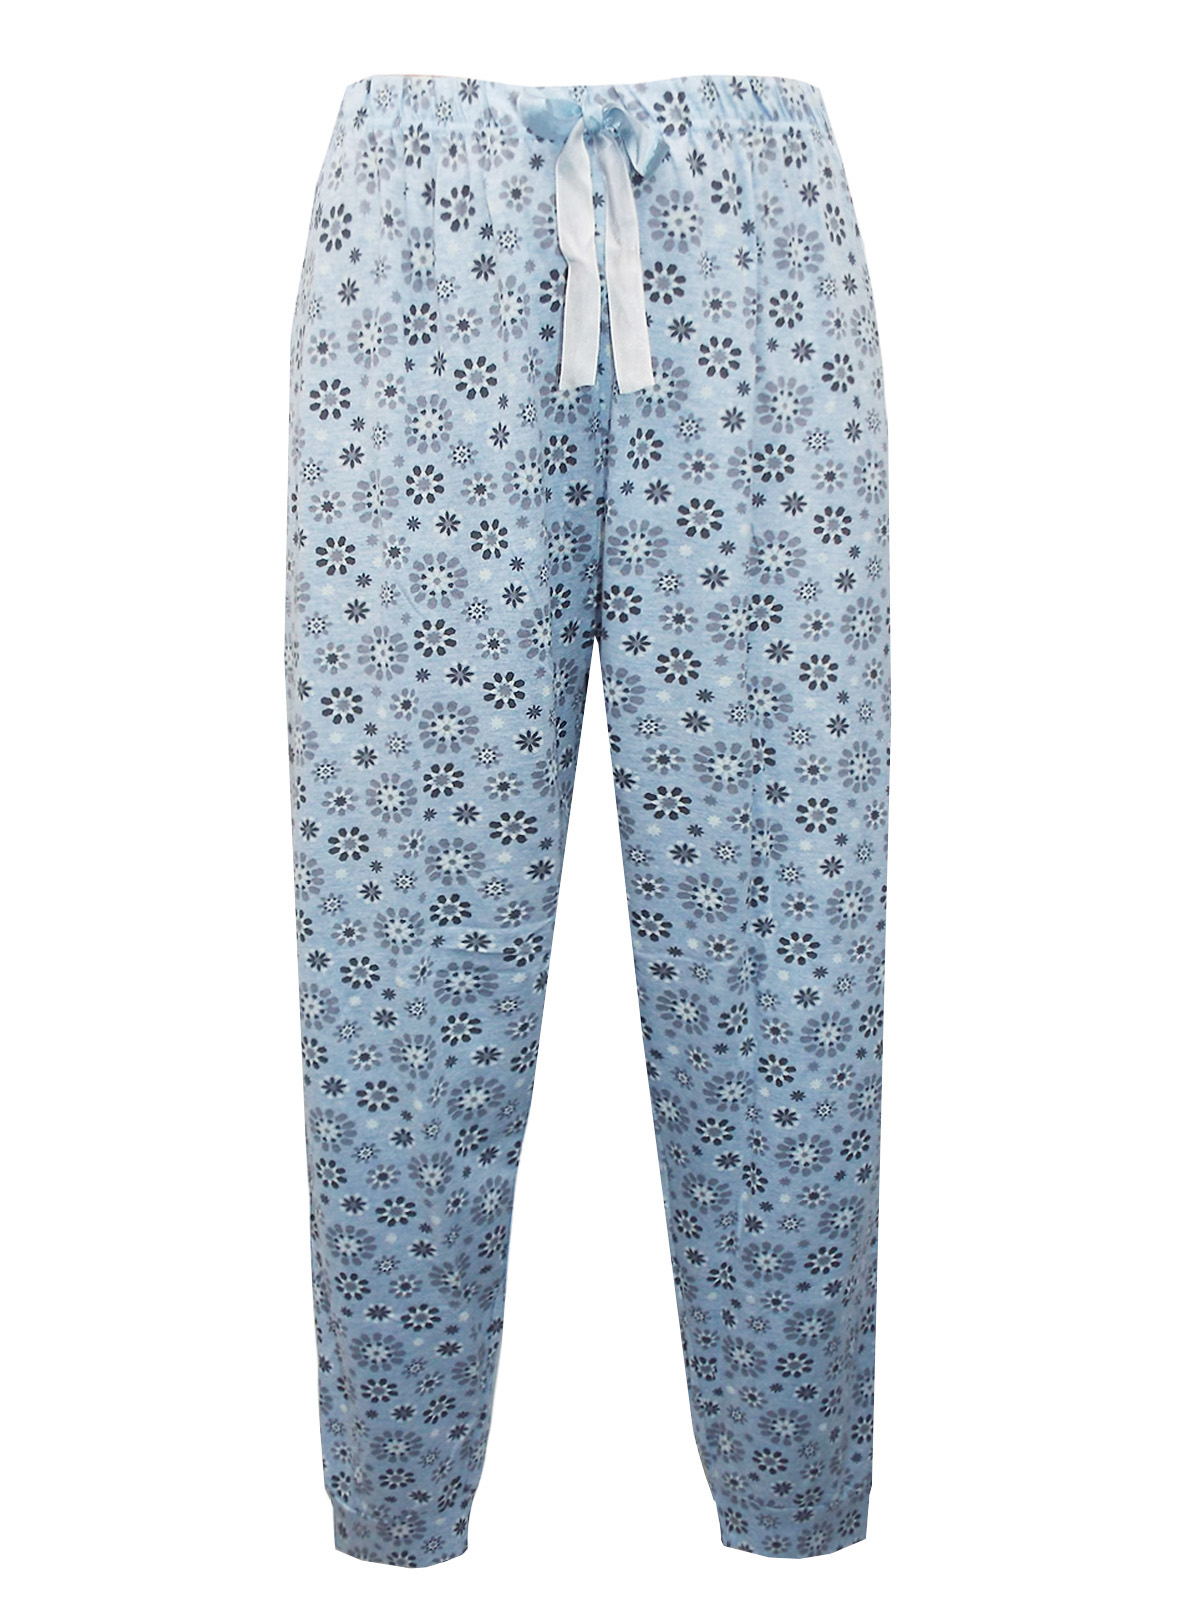 CURVE - - ASSORTED Printed Pyjama Bottoms - Plus Size 22/24 to 30/32